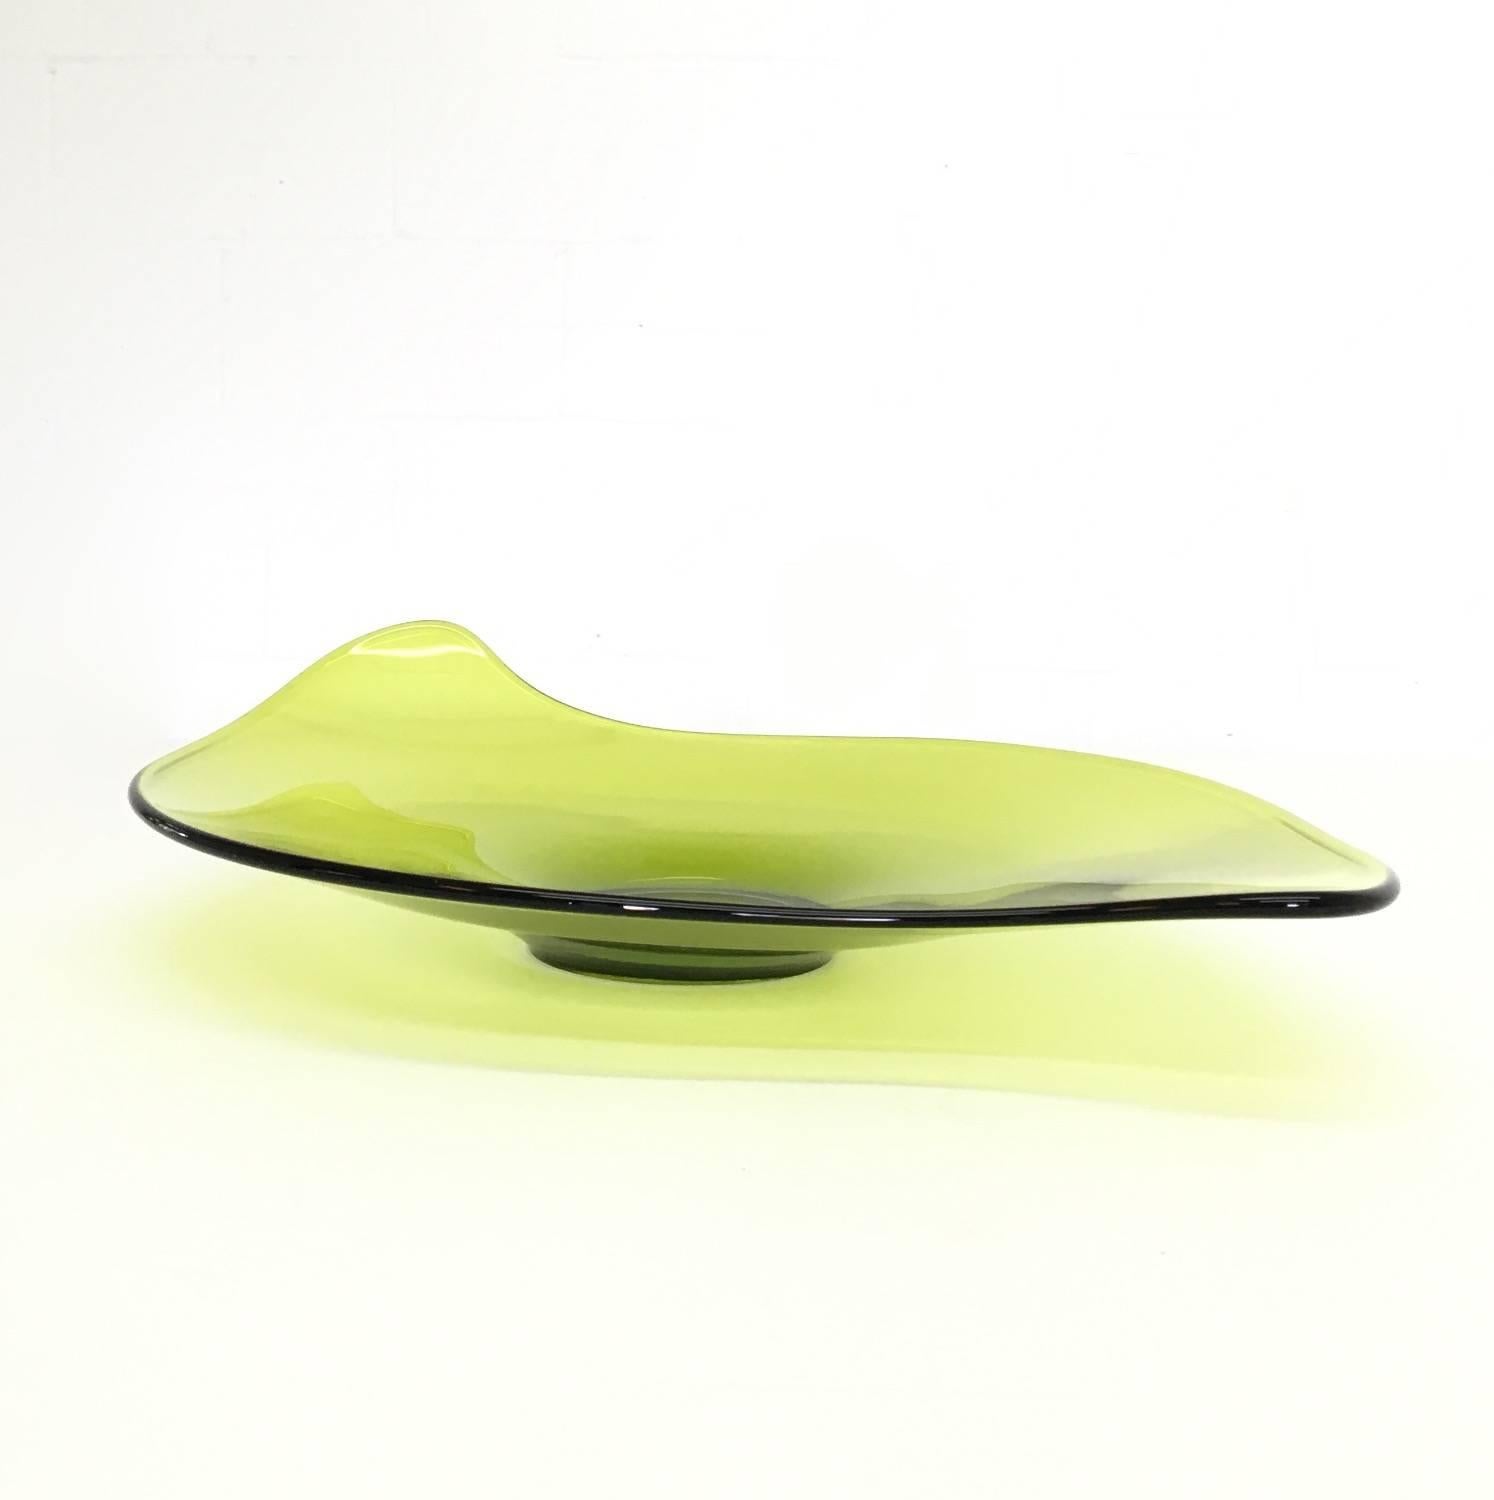 Midcentury Green Boomerang Platter
Measurements: 11.5"W x 16"D x 2.5"H